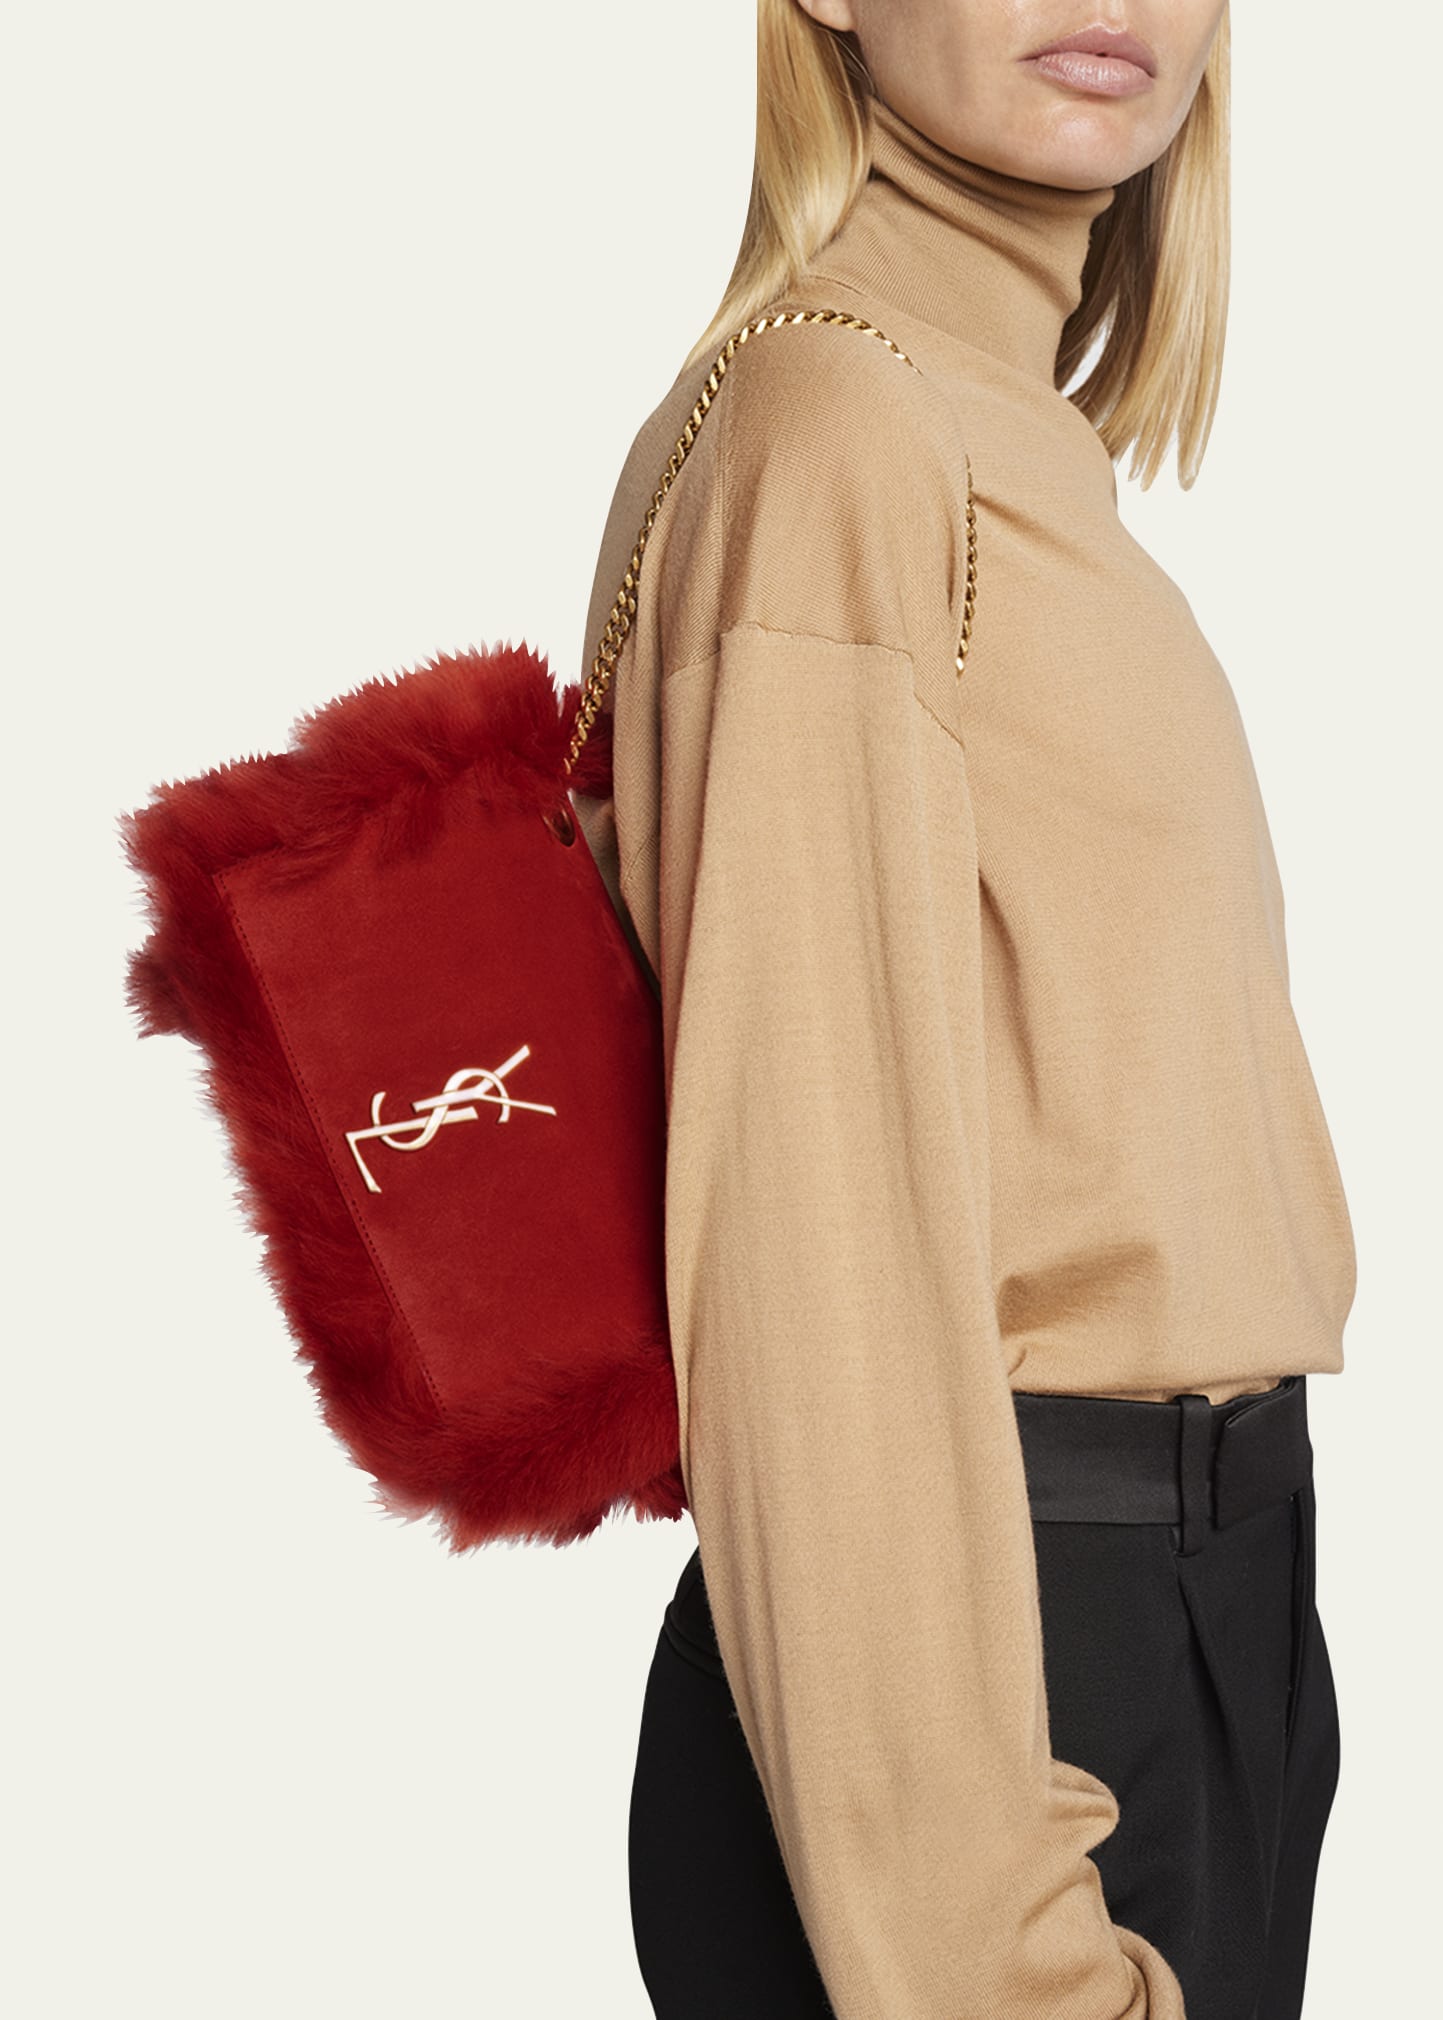 Saint Laurent Small Kate Reversible Chain Bag in Pavot Rouge